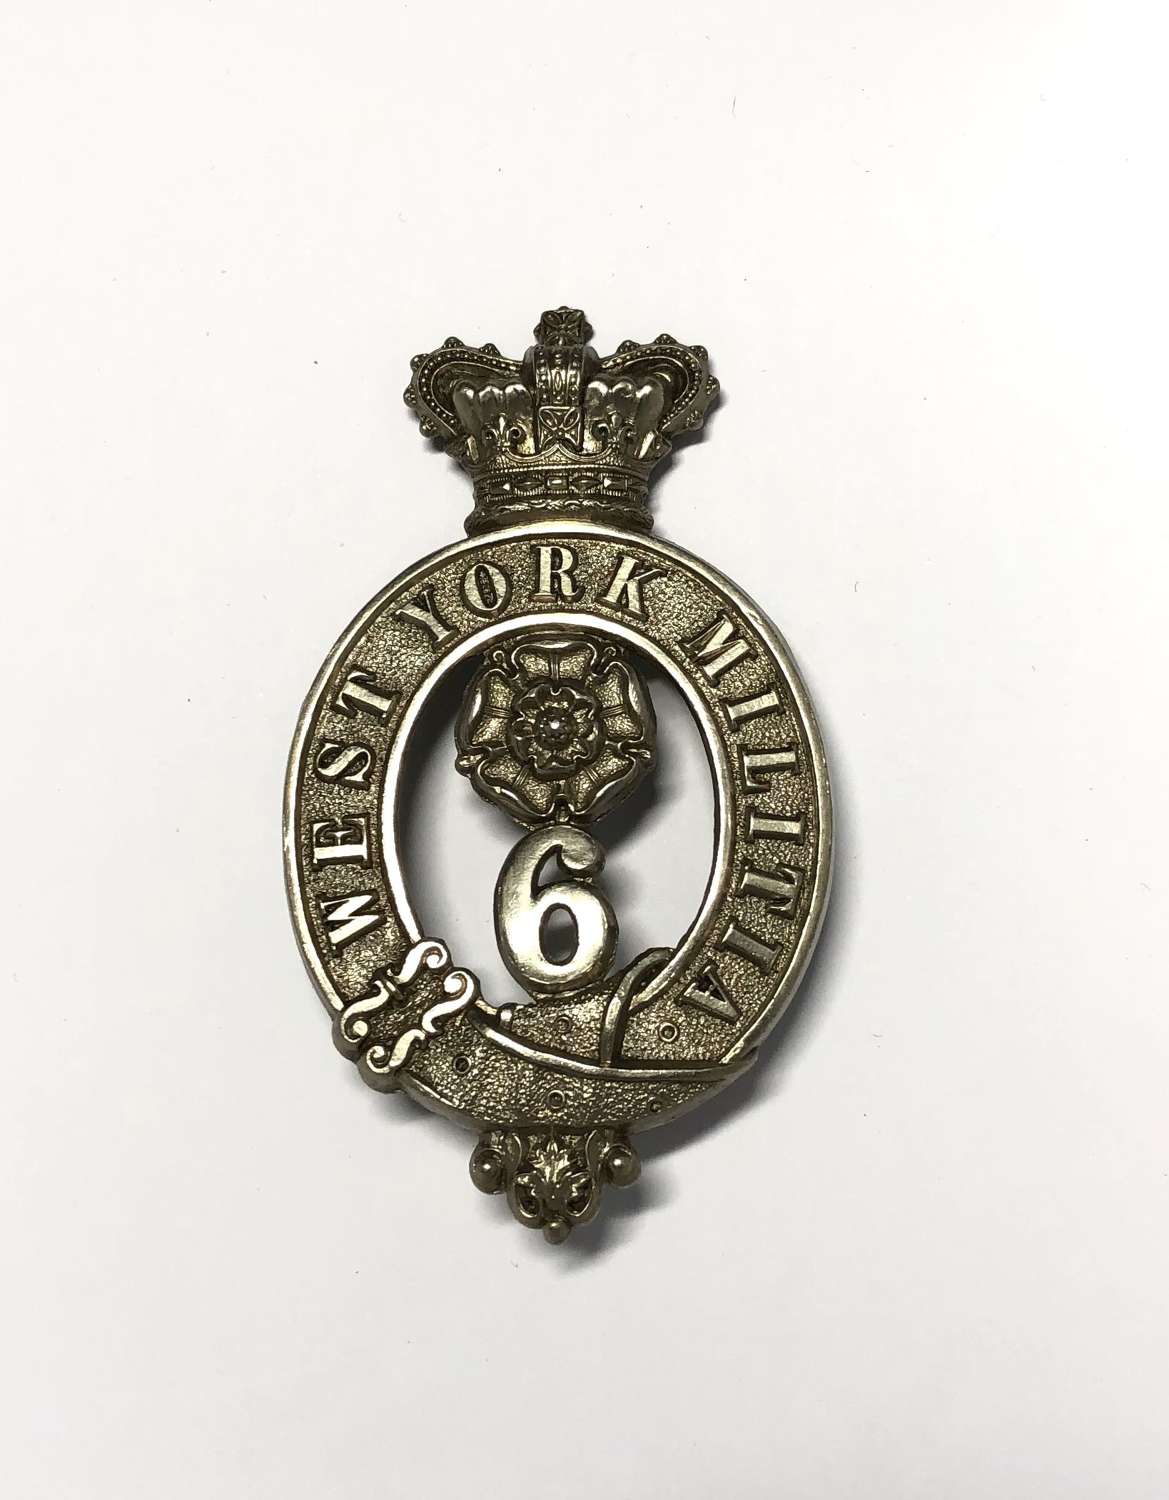 6th West York Militia Victorian glengarry badge circa 1874-81